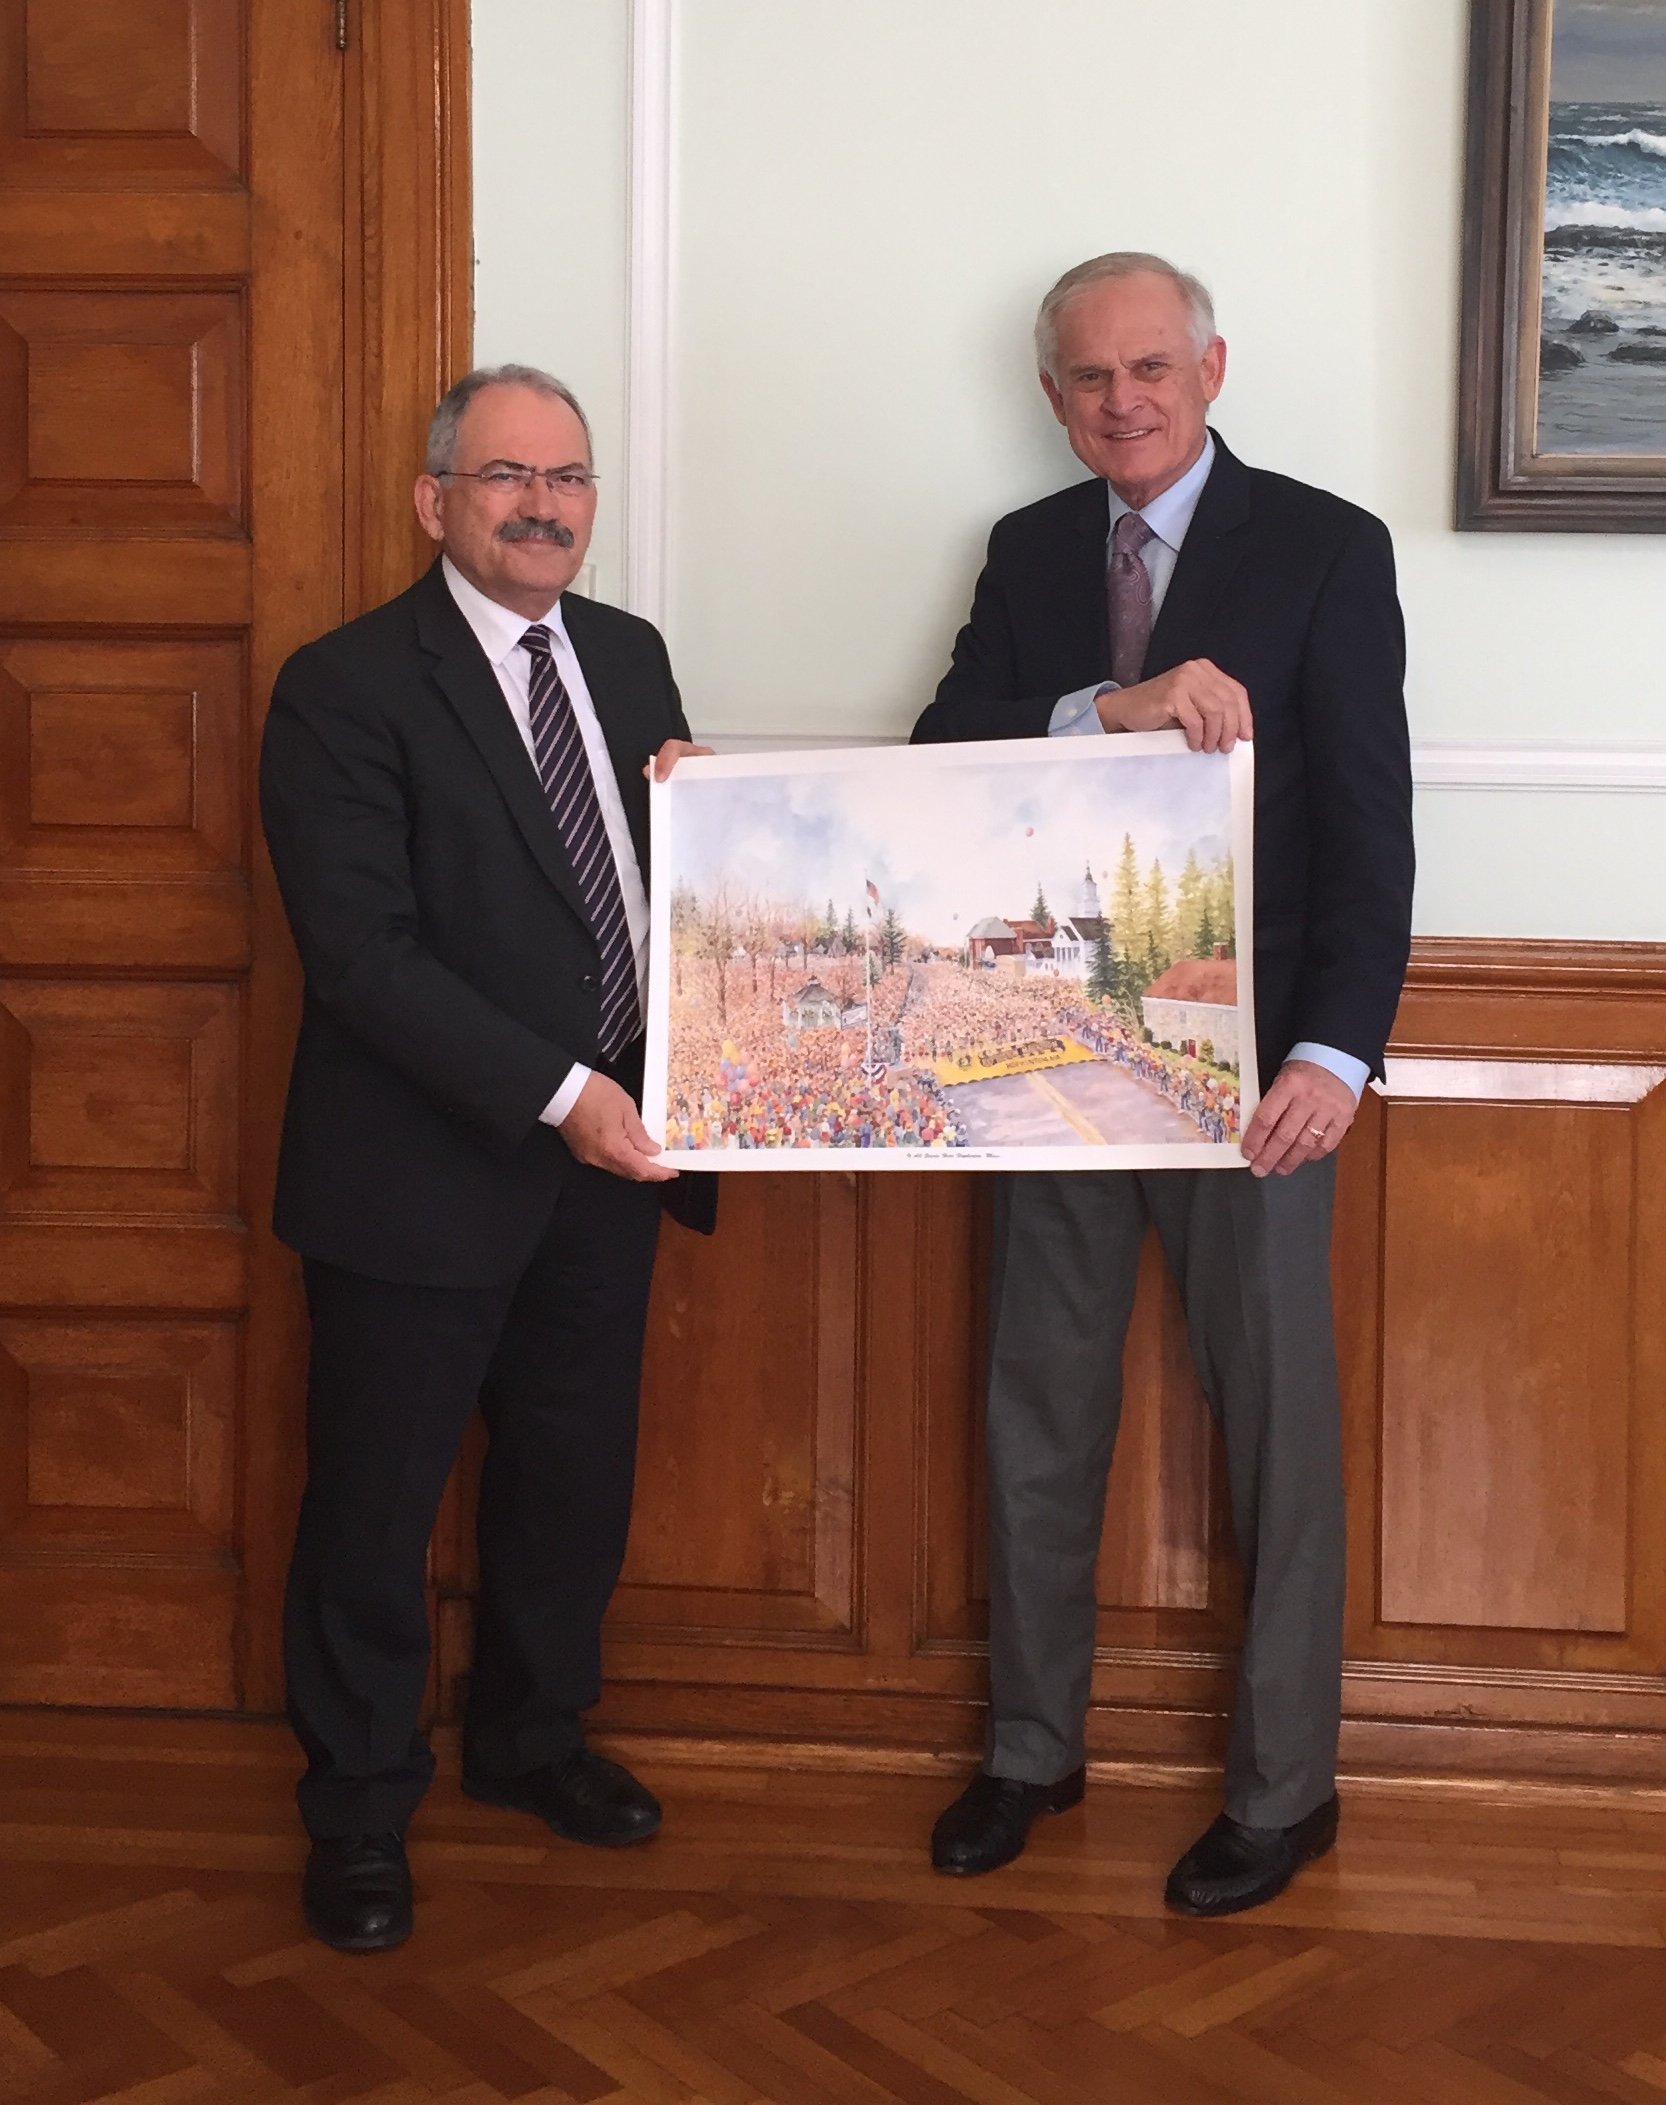 Tim Kilduff being awarded a painting of the Limassol Marathon